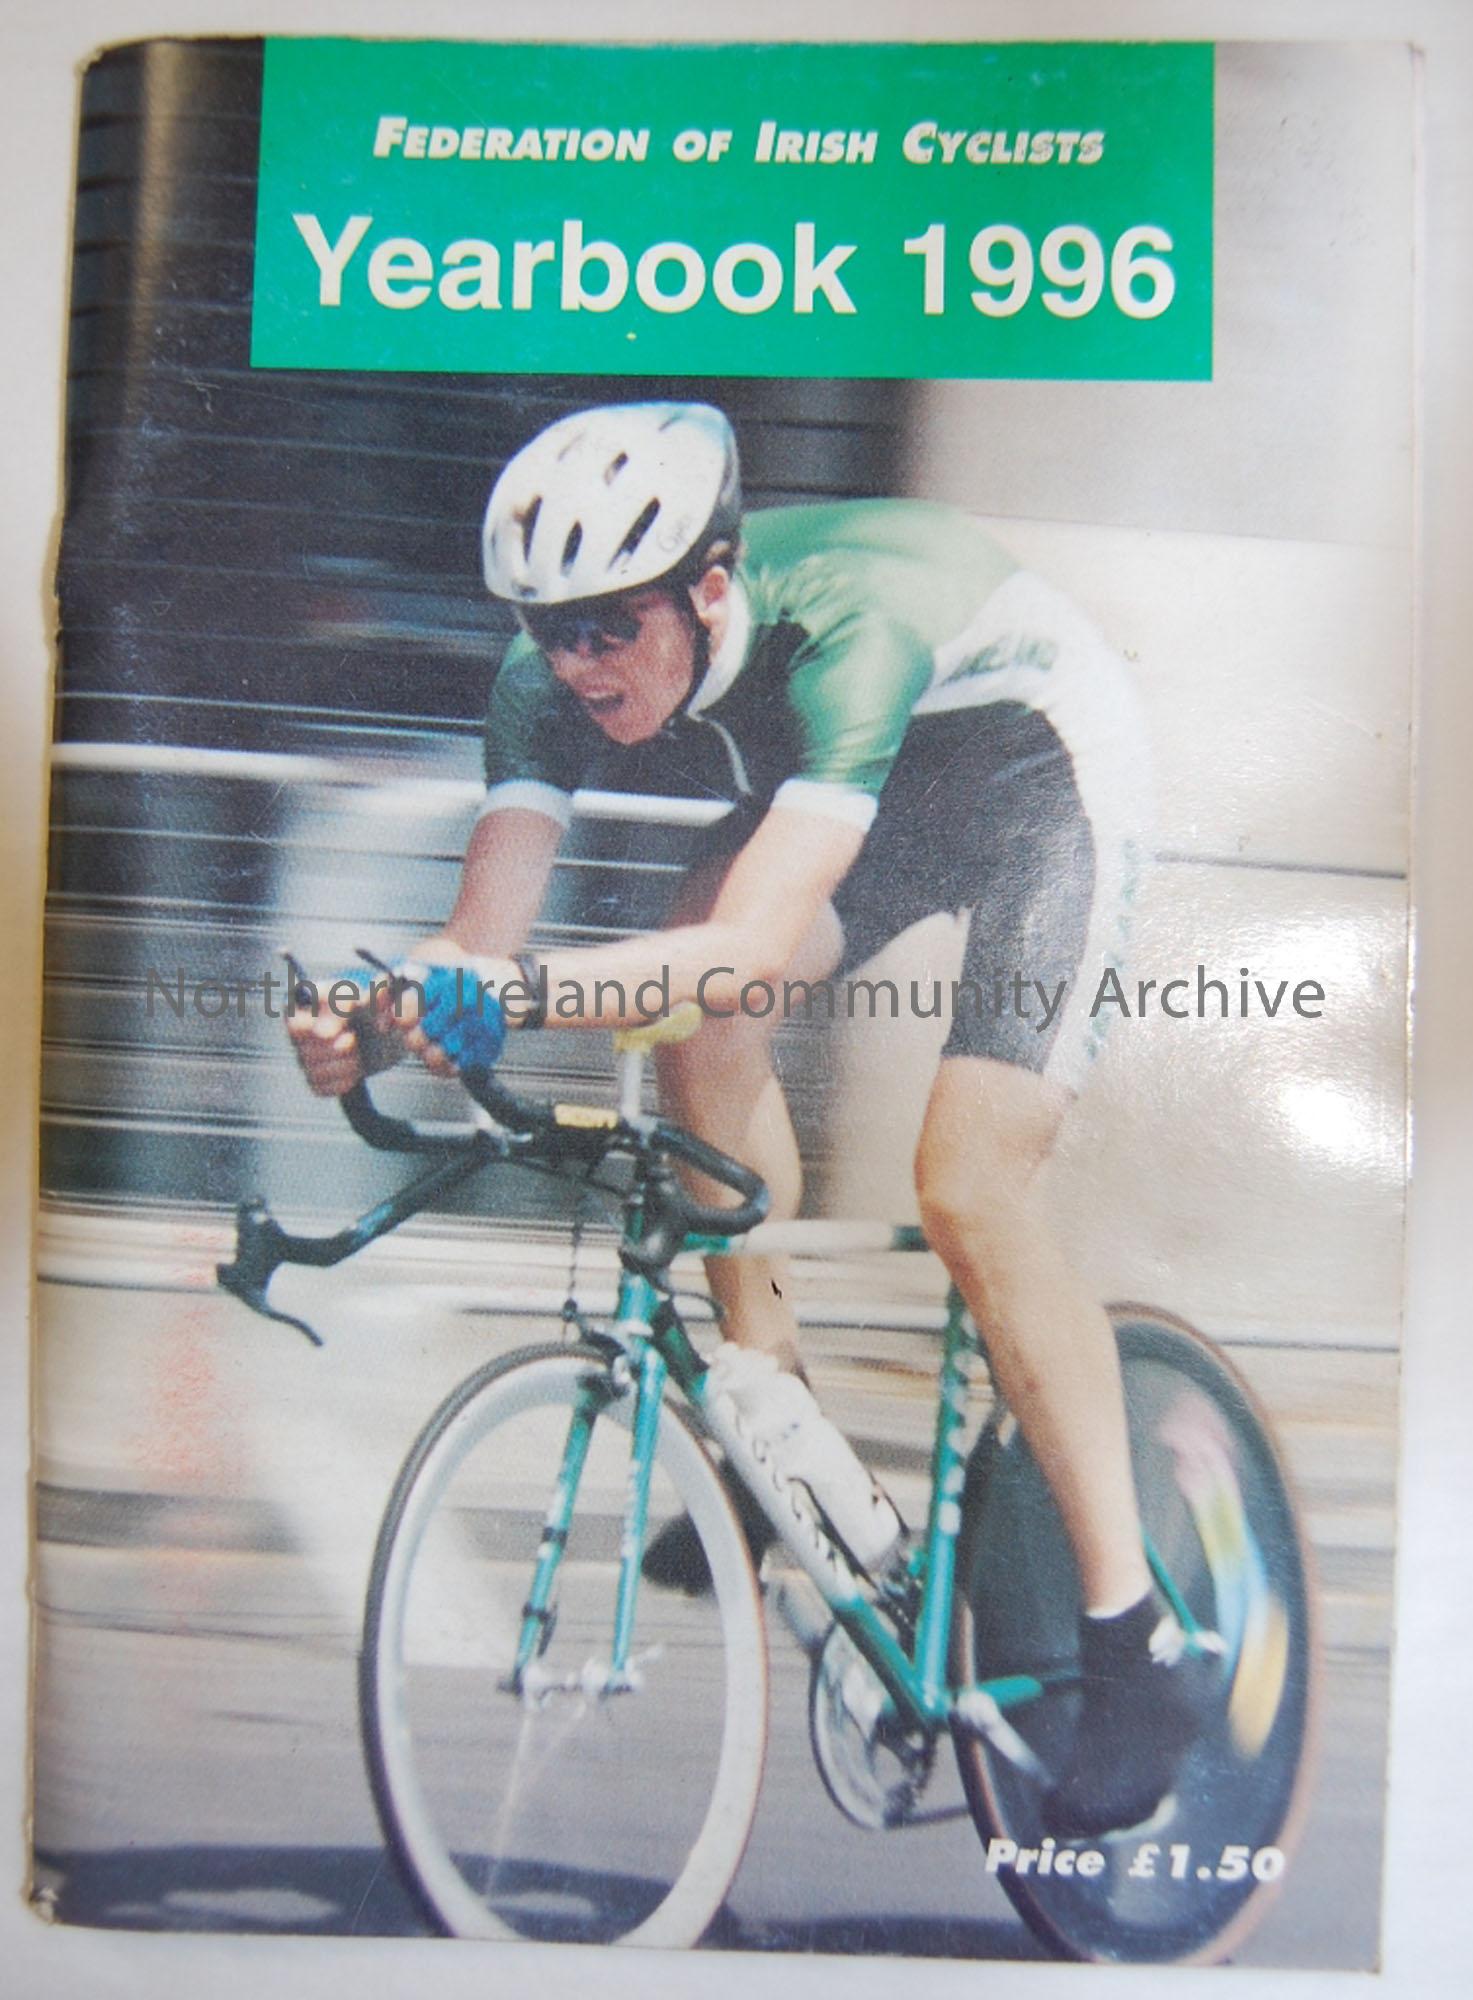 Federation of Irish Cyclists Handbook 1996